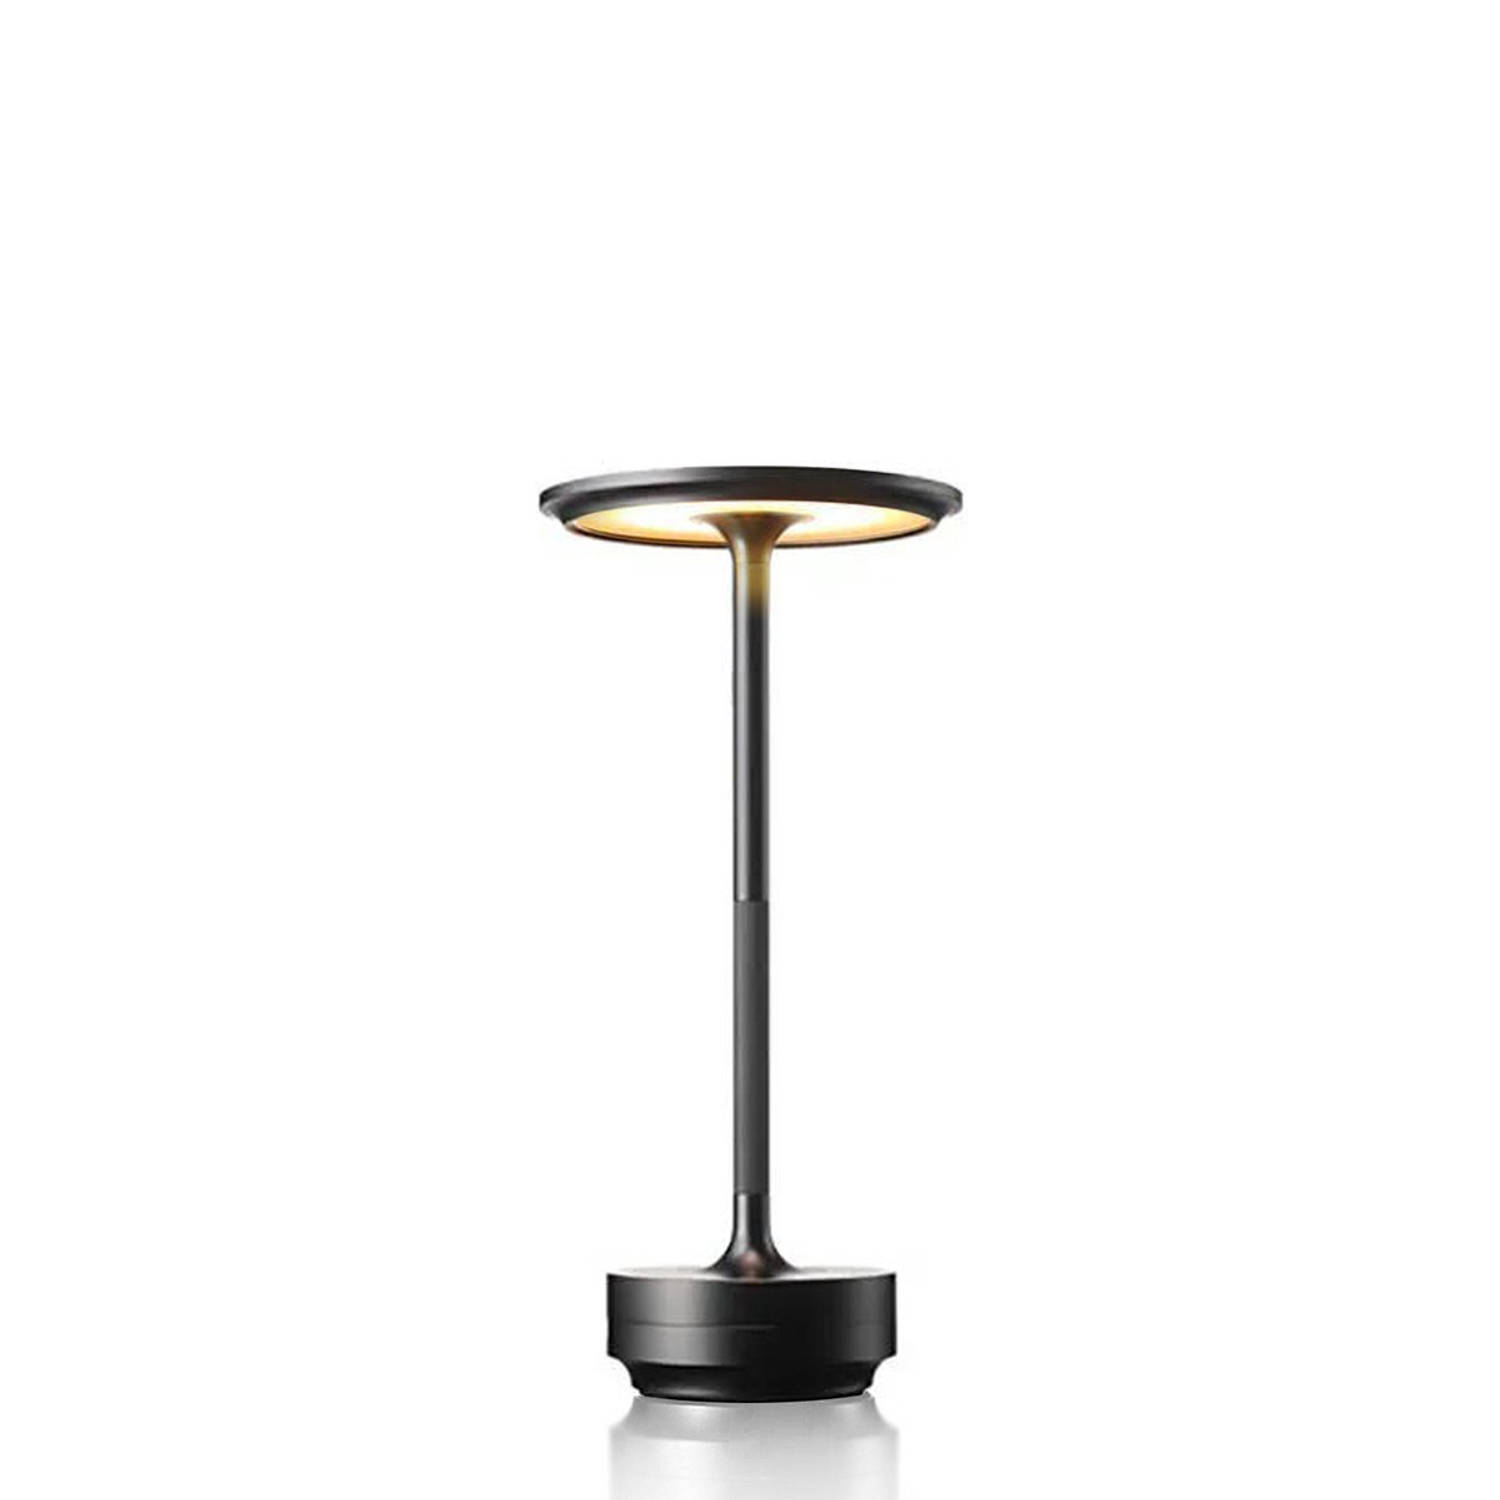 Goliving Tafellamp Op Accu - Oplaadbaar en Dimbaar - Spatwaterbestendig - Past in ieder interieur - Energiezuinig - Hoogte 27 cm - Zwart